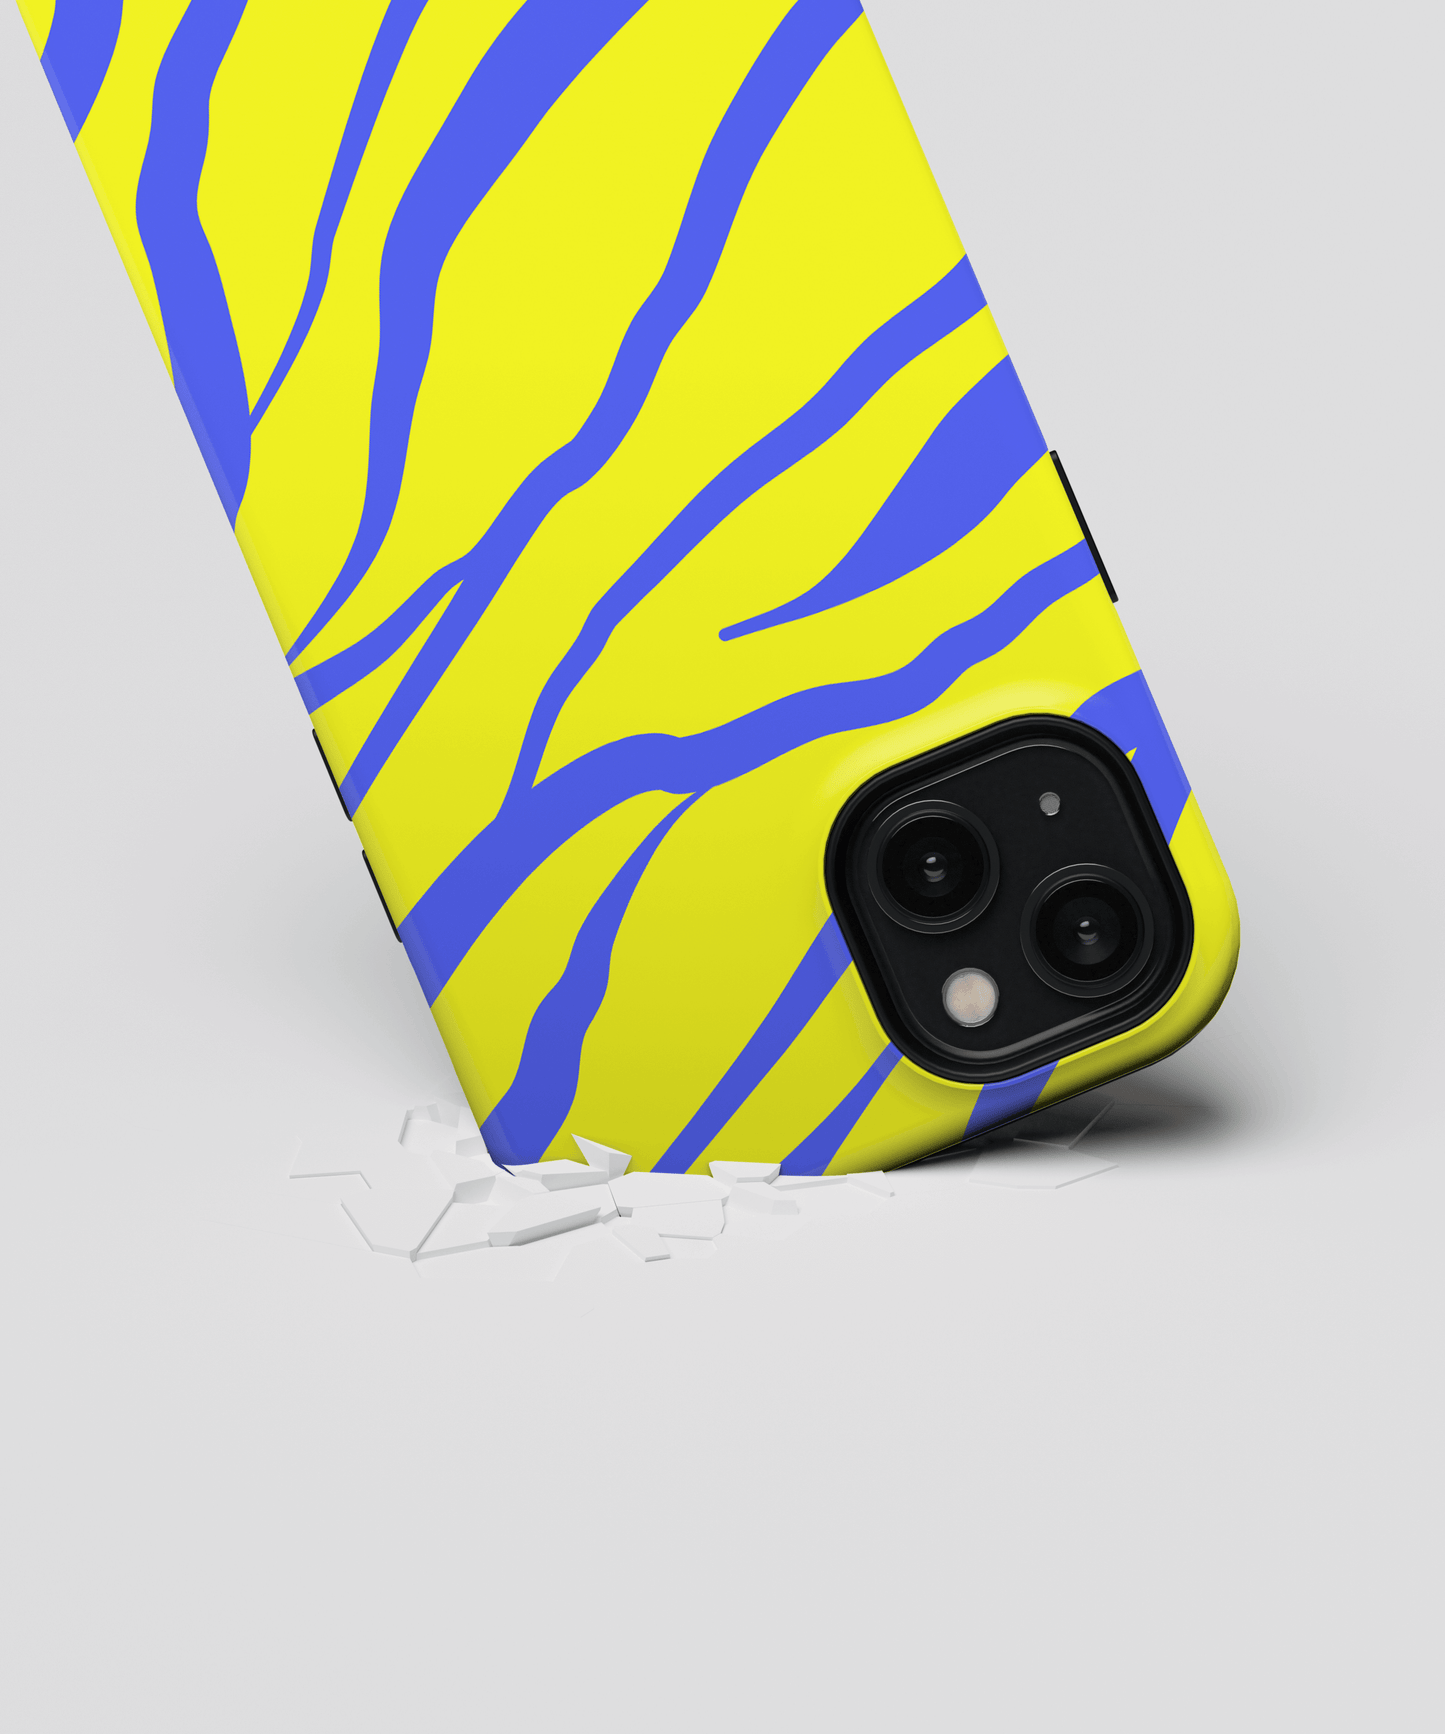 Neonique - Samsung Galaxy A41 phone case